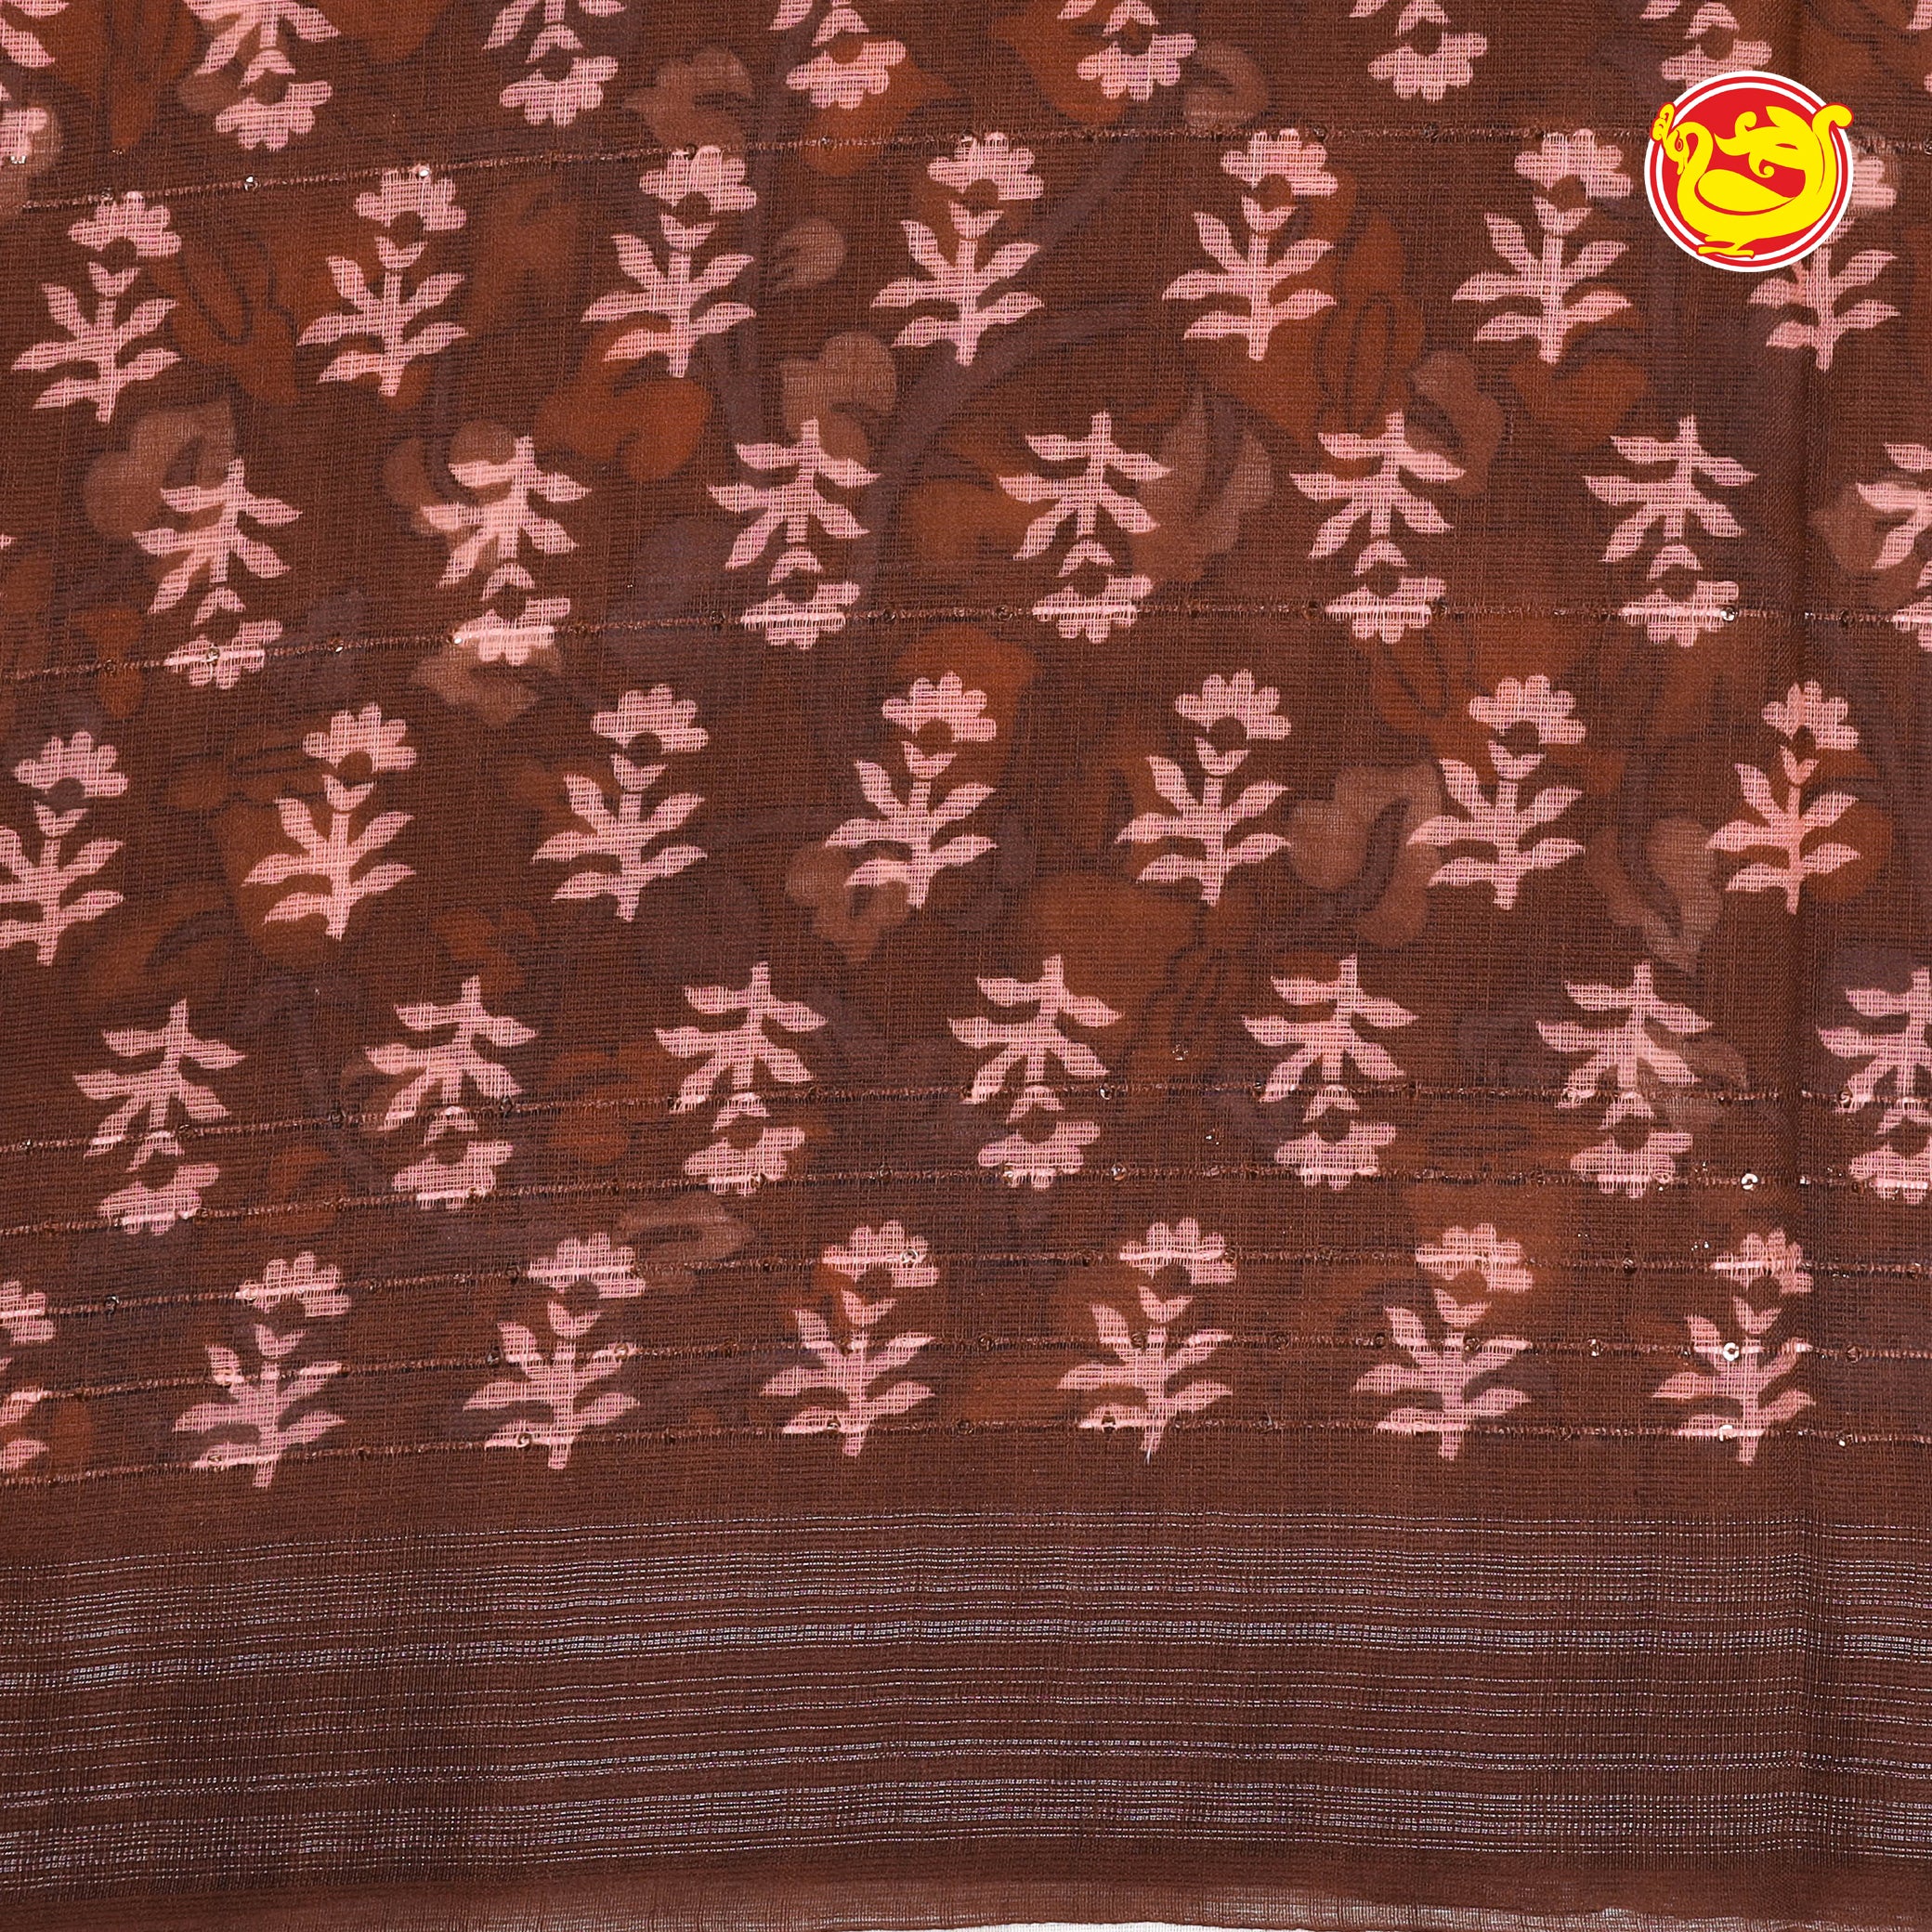 Light brown linen cotton saree